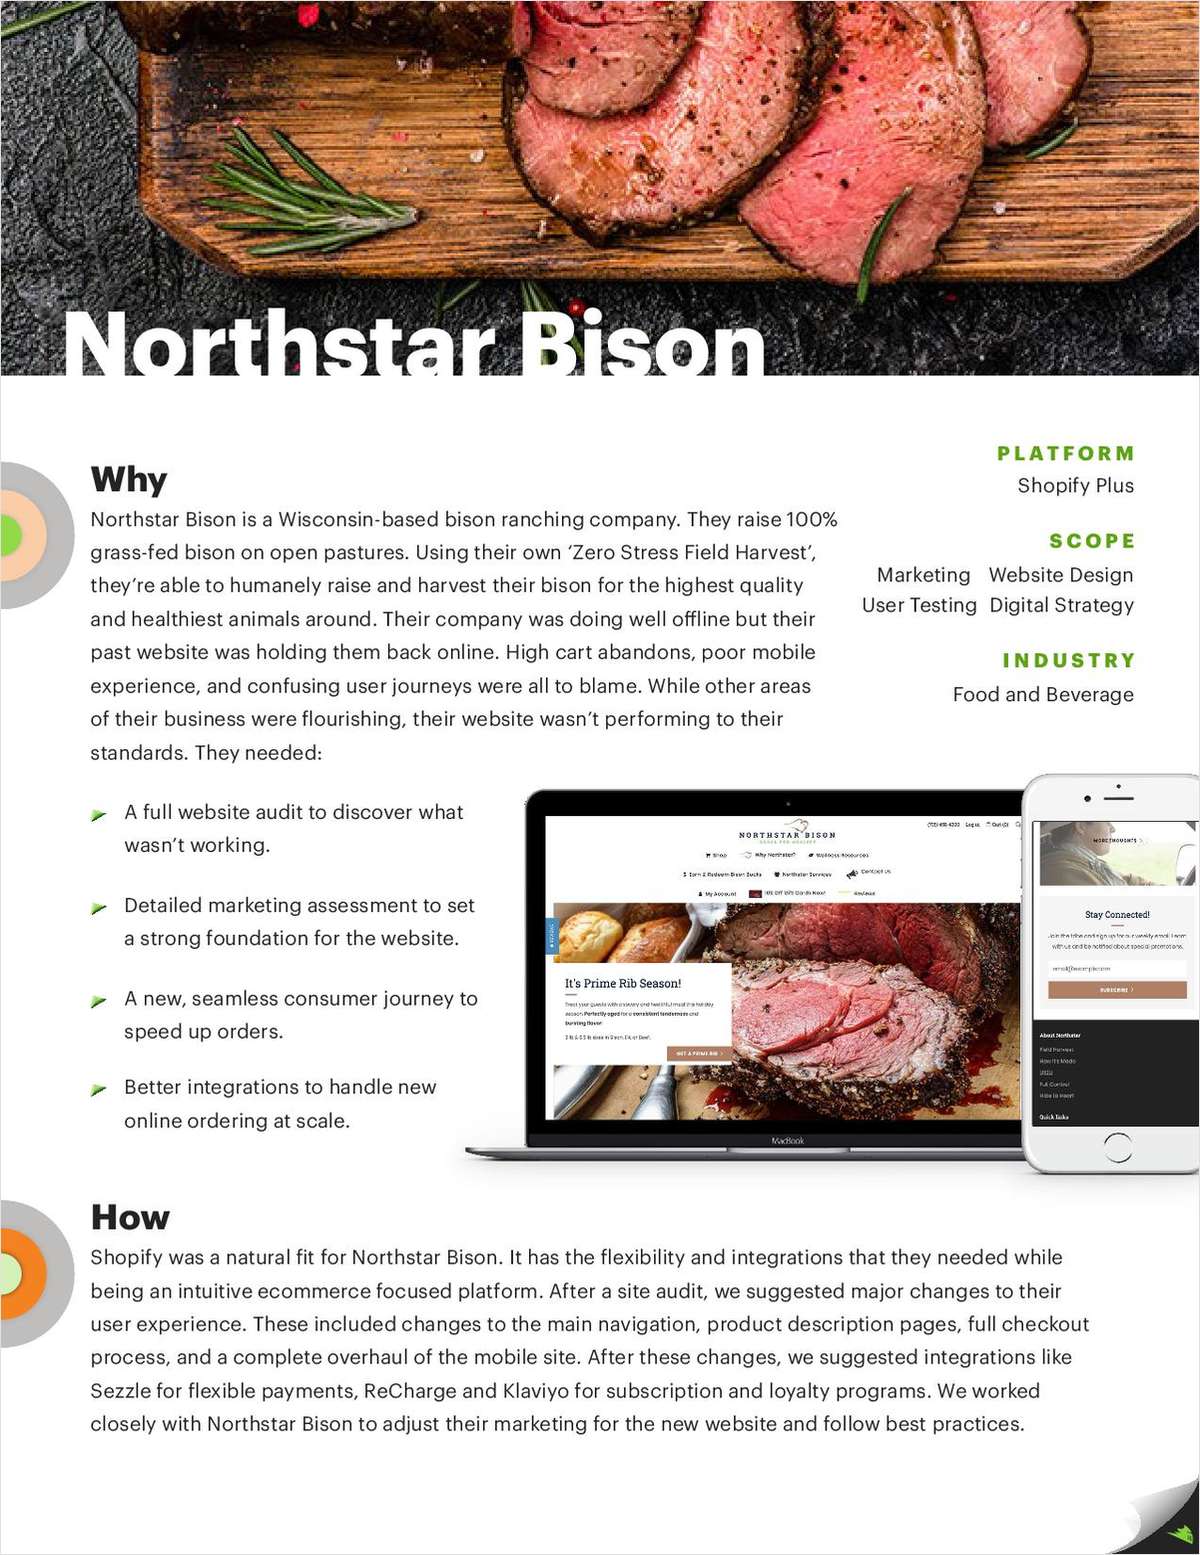 How Shopify Revolutionized Northstar Bison's Online Presence